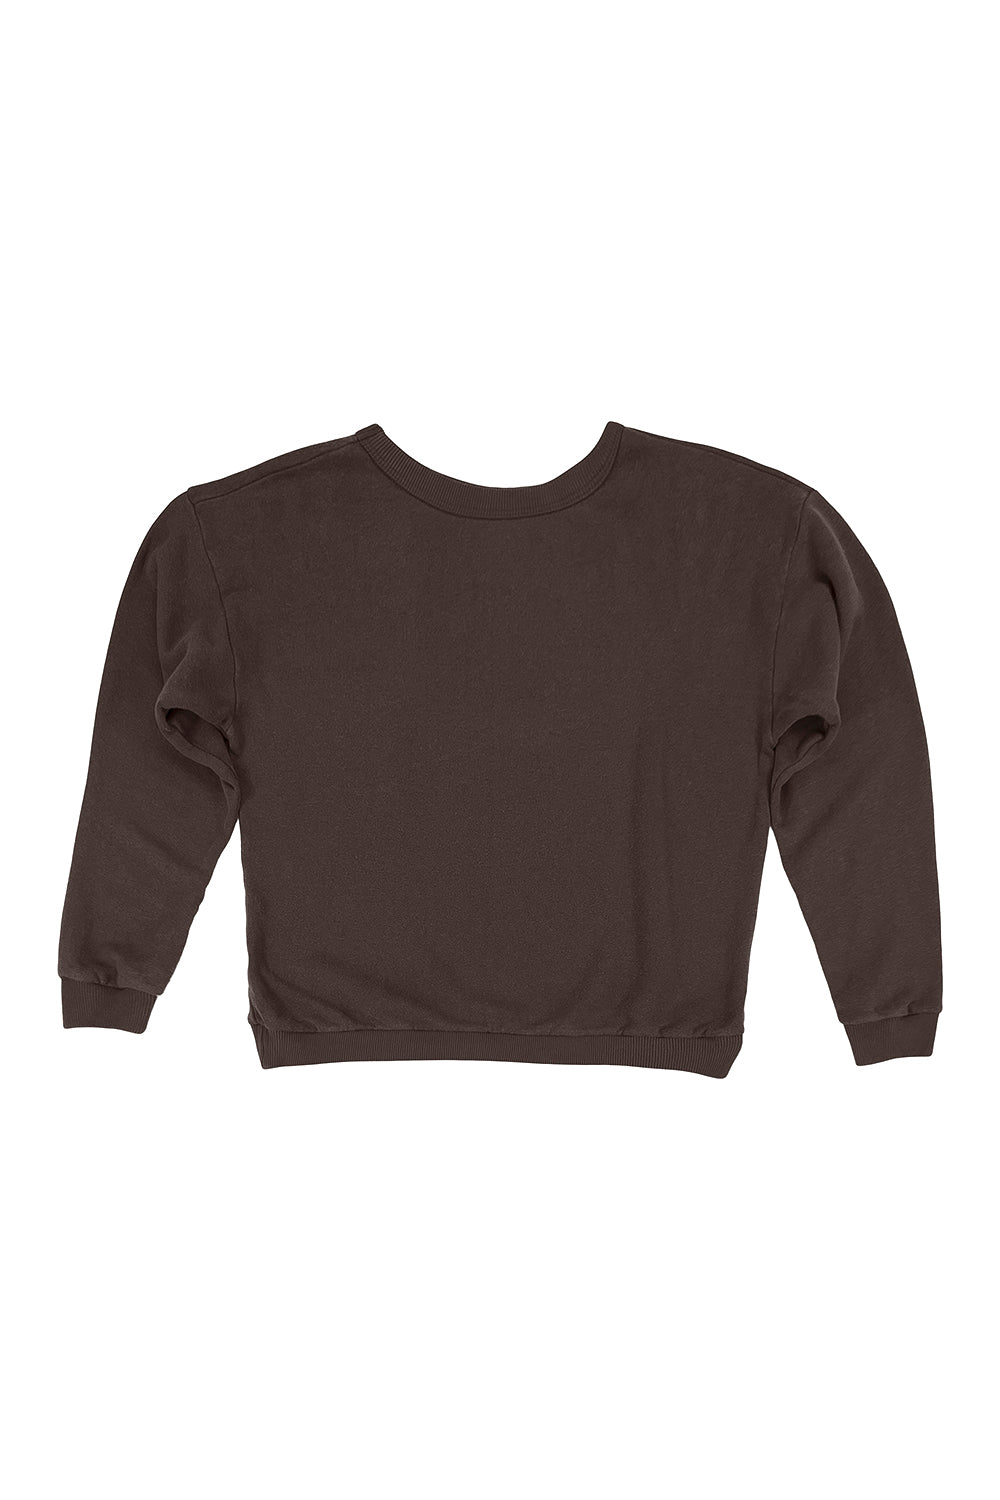 Crux Cropped Sweatshirt - Sale Colors | Jungmaven Hemp Clothing & Accessories / Color: Coffee Bean